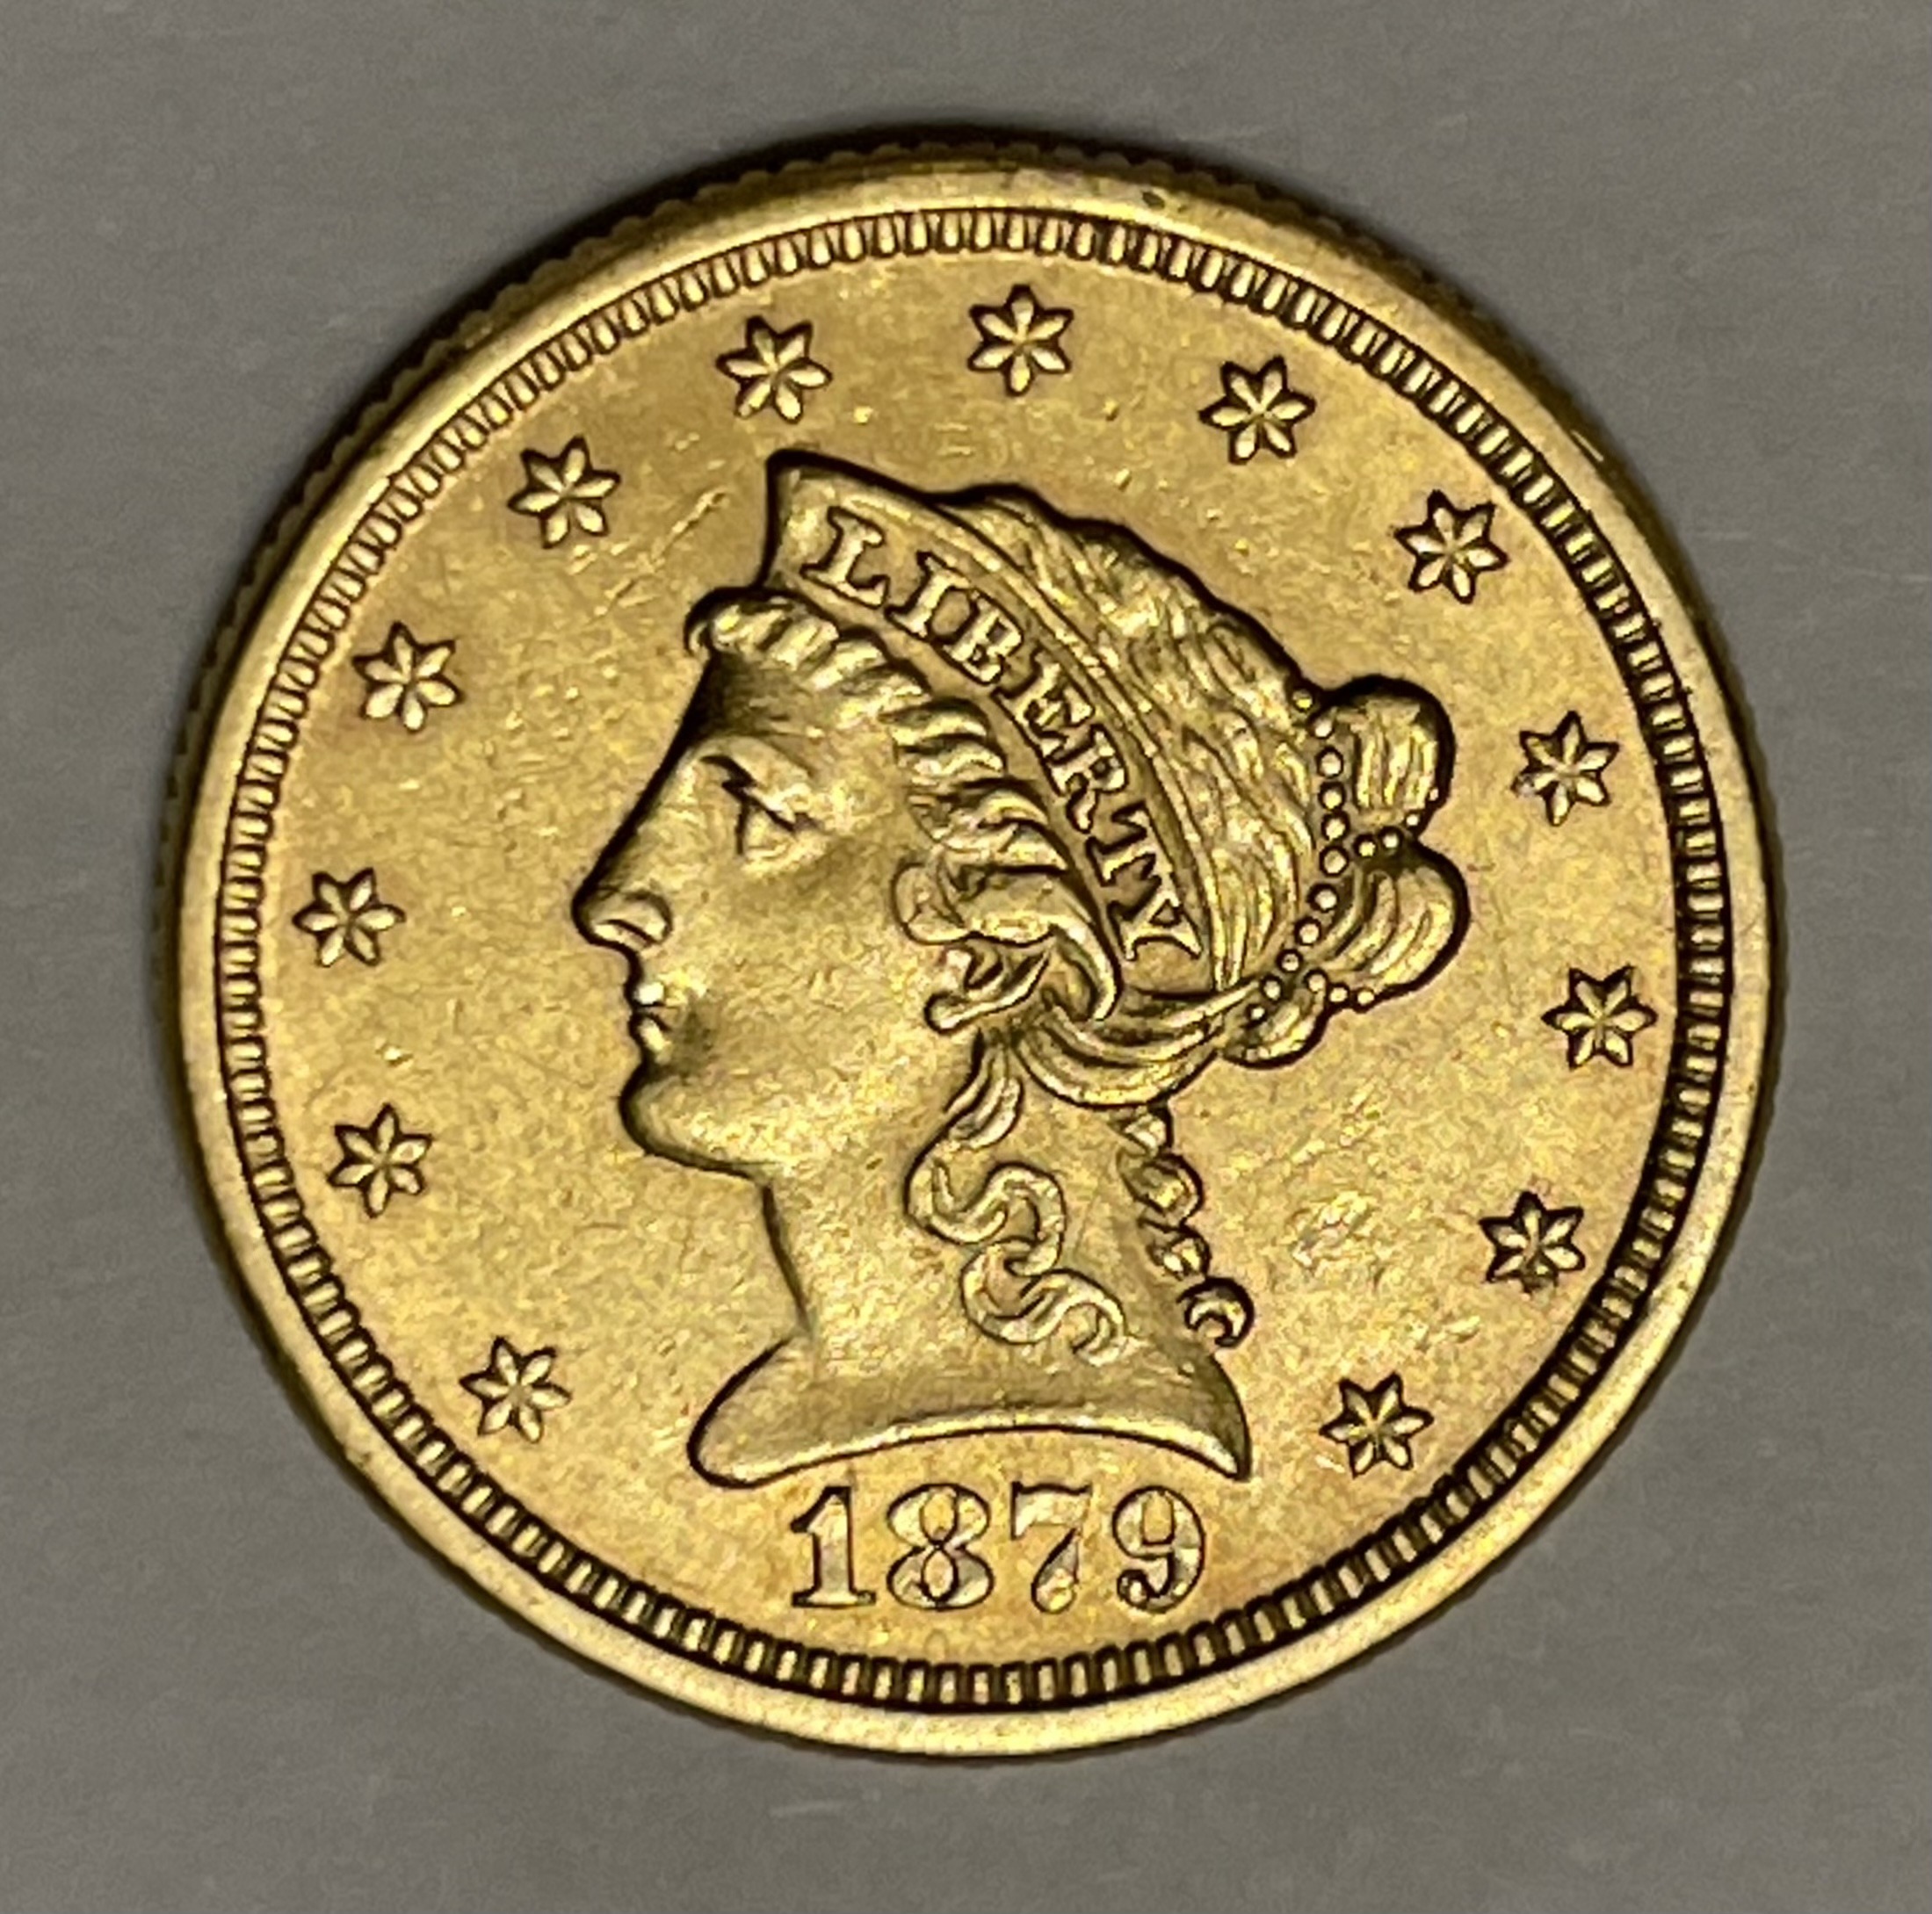 2 1/2 Dollars 1879. – UNITED STATES OF AMERICA – Liberty Eagle – Numis Go